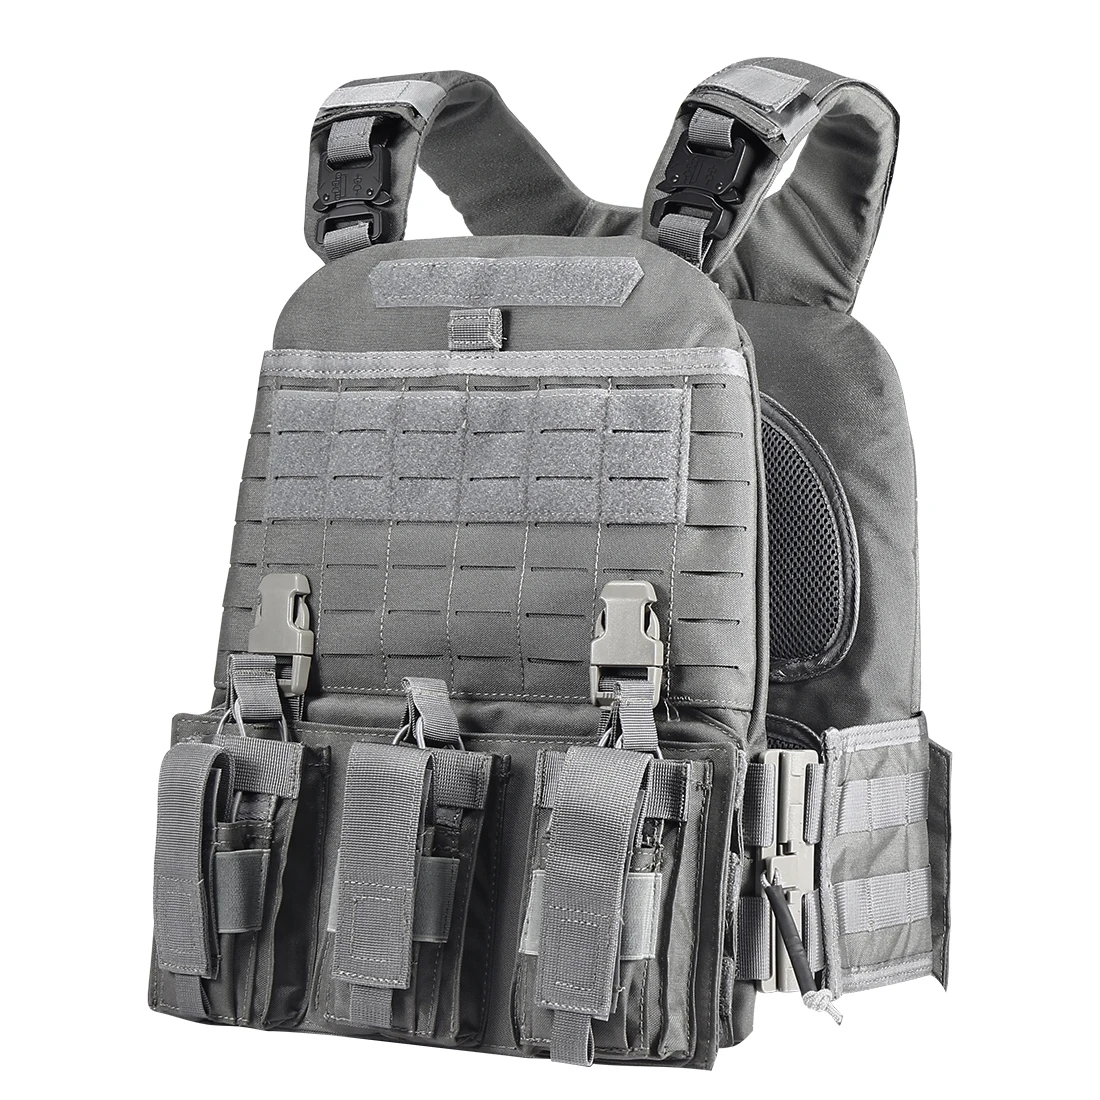 US $124.99 Outdoor Equipment Multifunction Lightweight Quick Release Training Military Tactics Vest Accessories Olive Drab Black